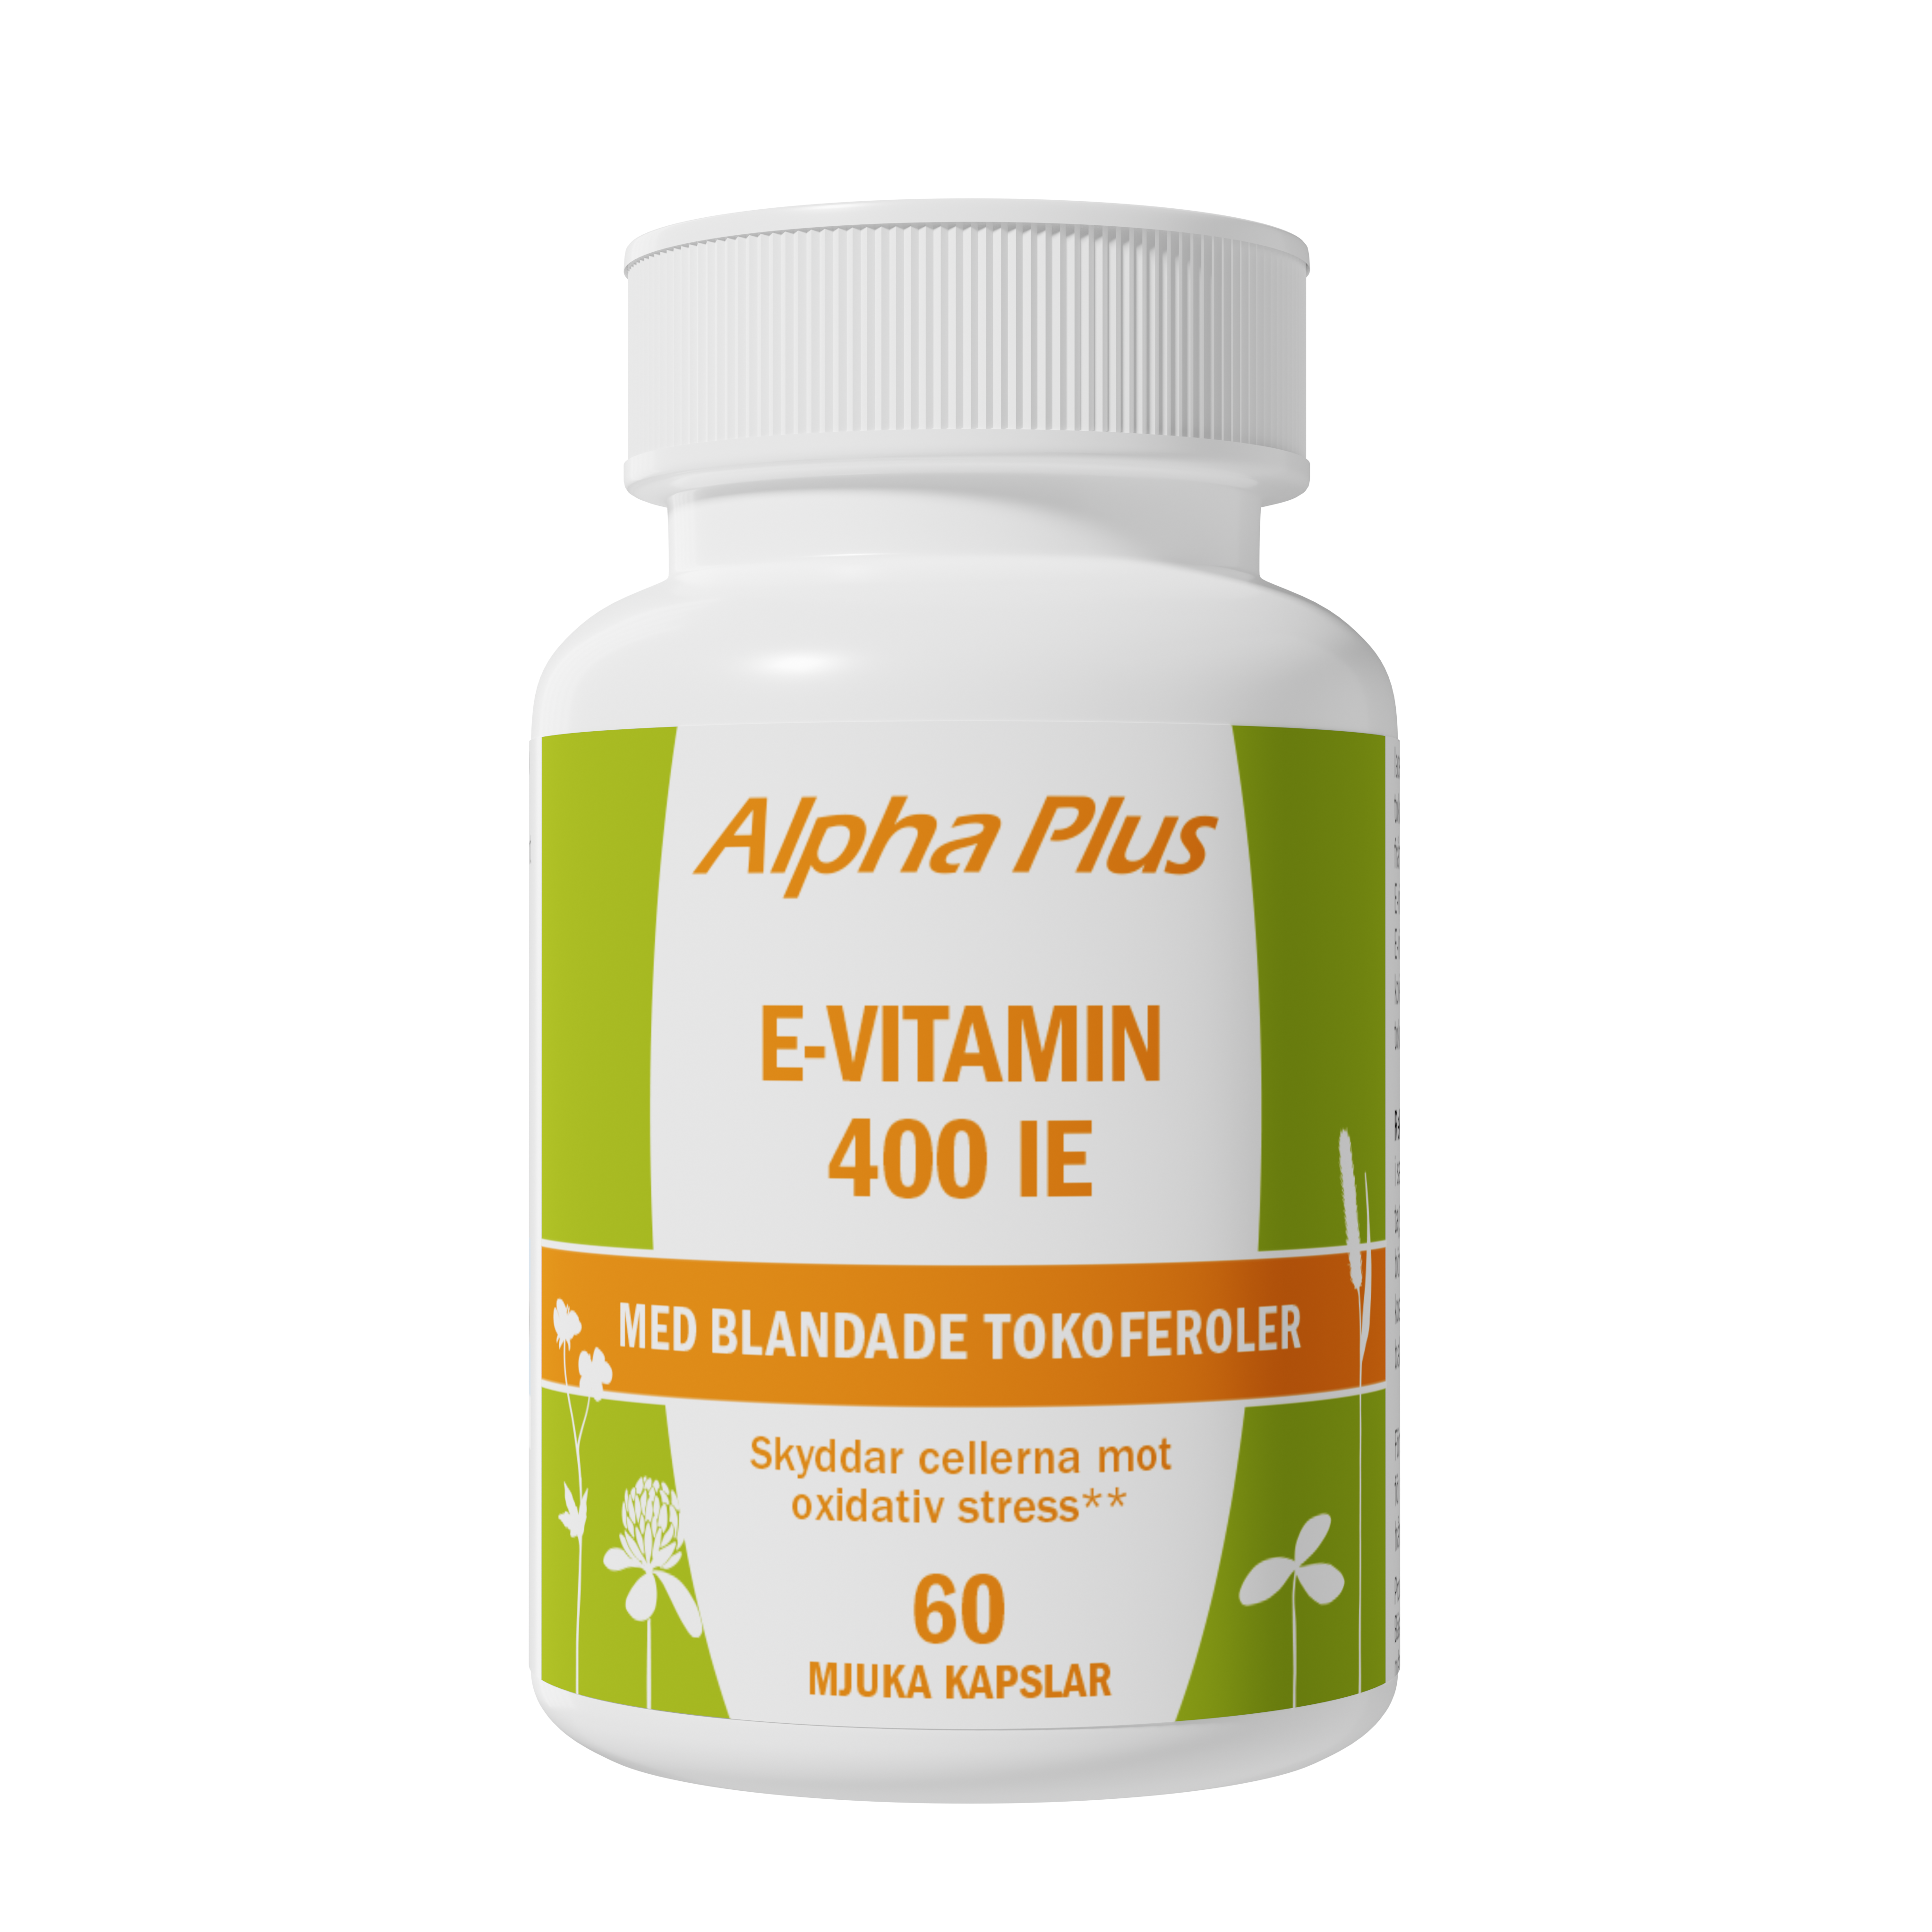 Alpha Plus E-vitamin 400 IE 60 kapslar